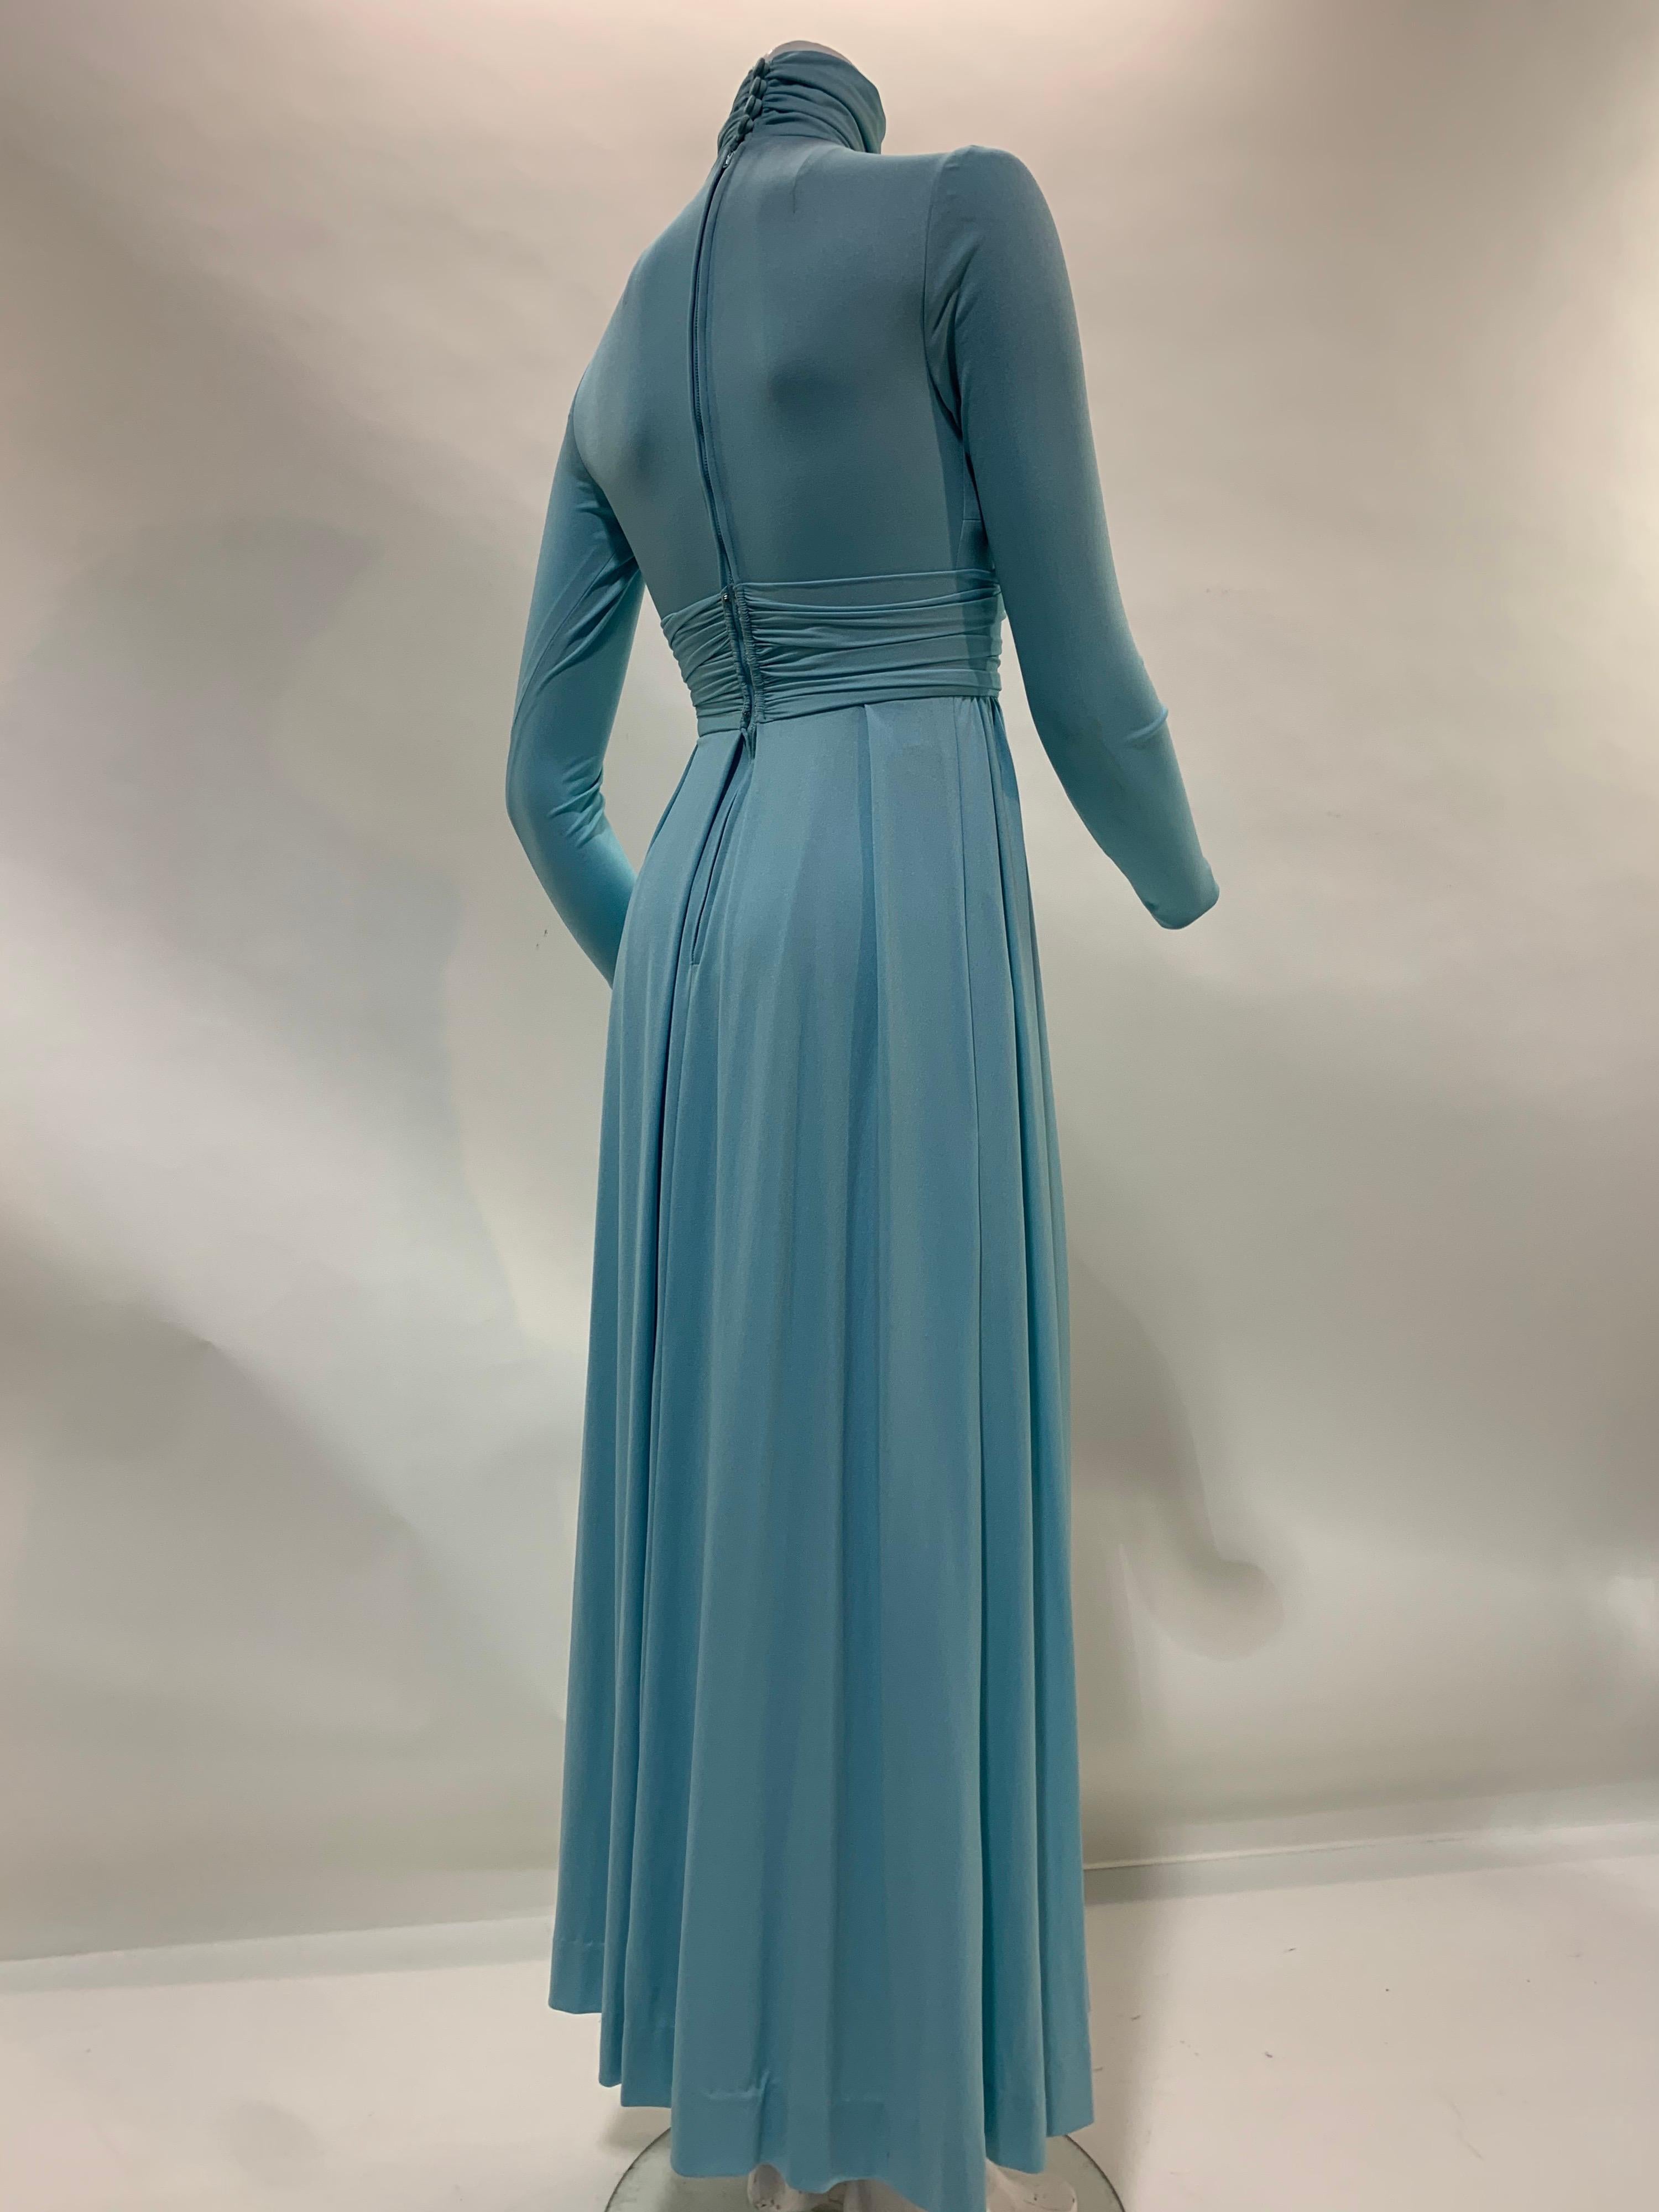 1970 Lillie Rubin Aquamarine Knit Maxi Dress w/ High Neck and Jeweled ...